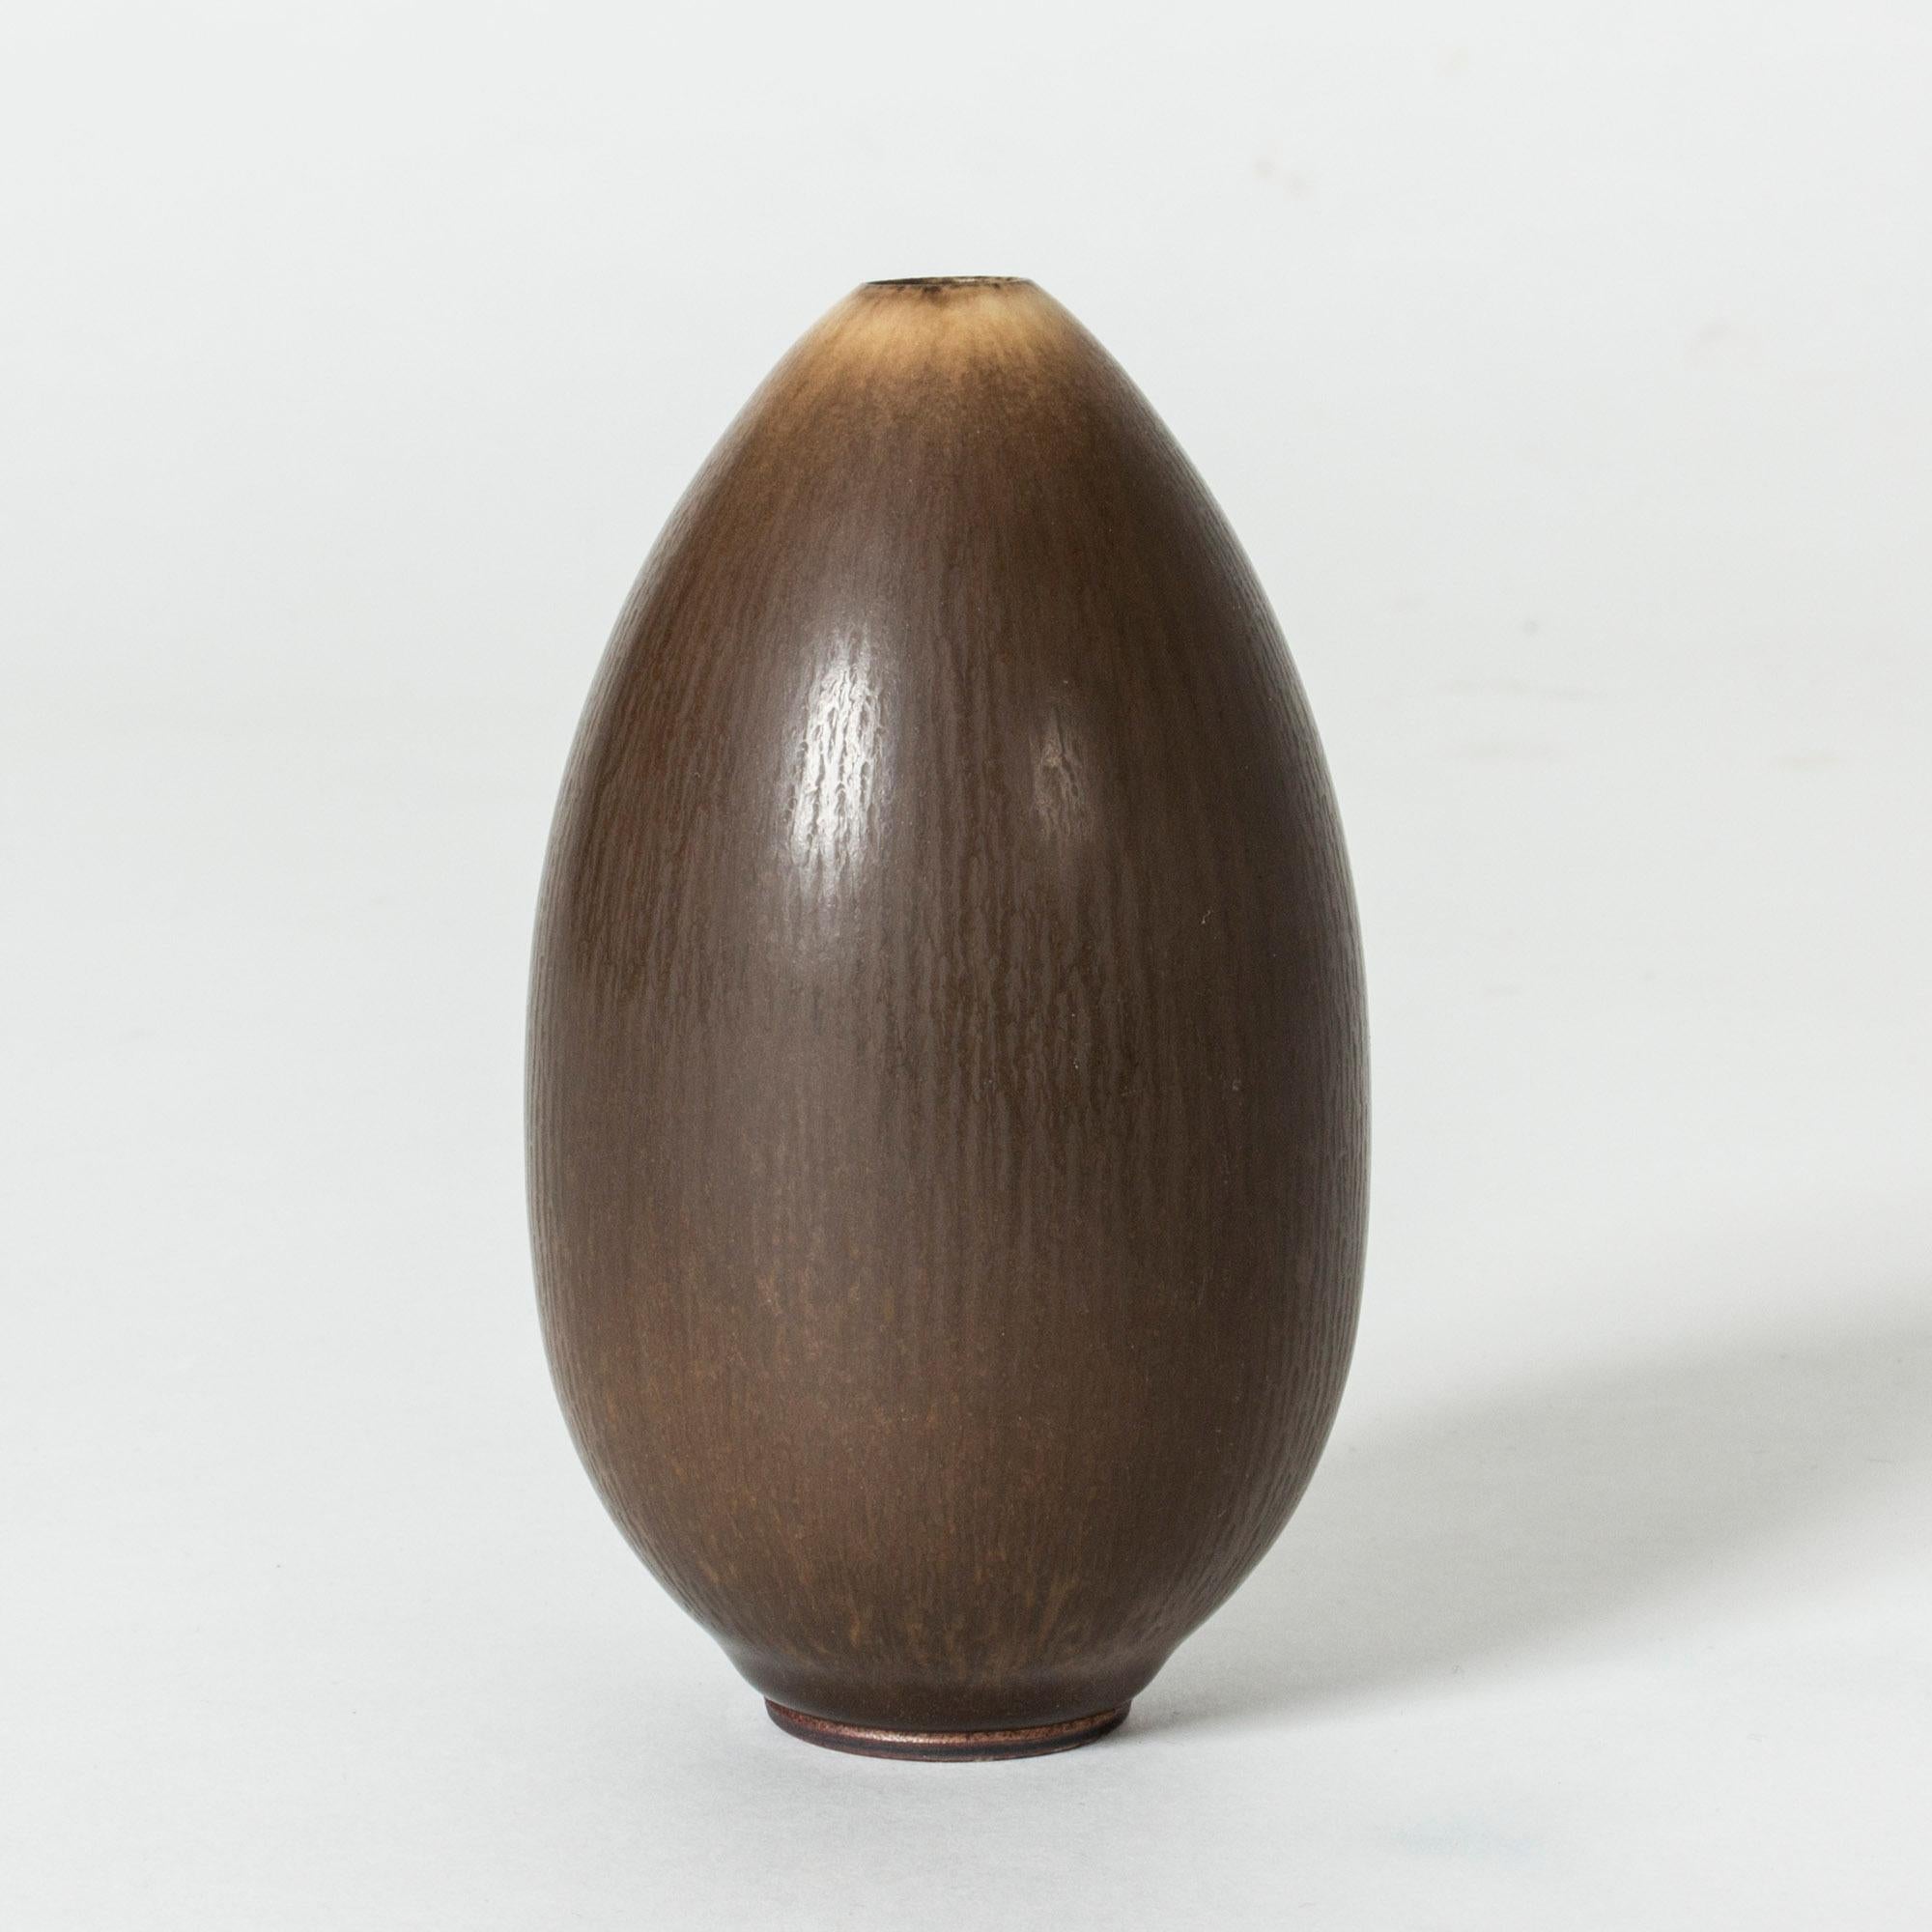 Lovely, streamlined stoneware vase by Berndt Friberg. Delicate egg shape, beautiful brown hare’s fur glaze.